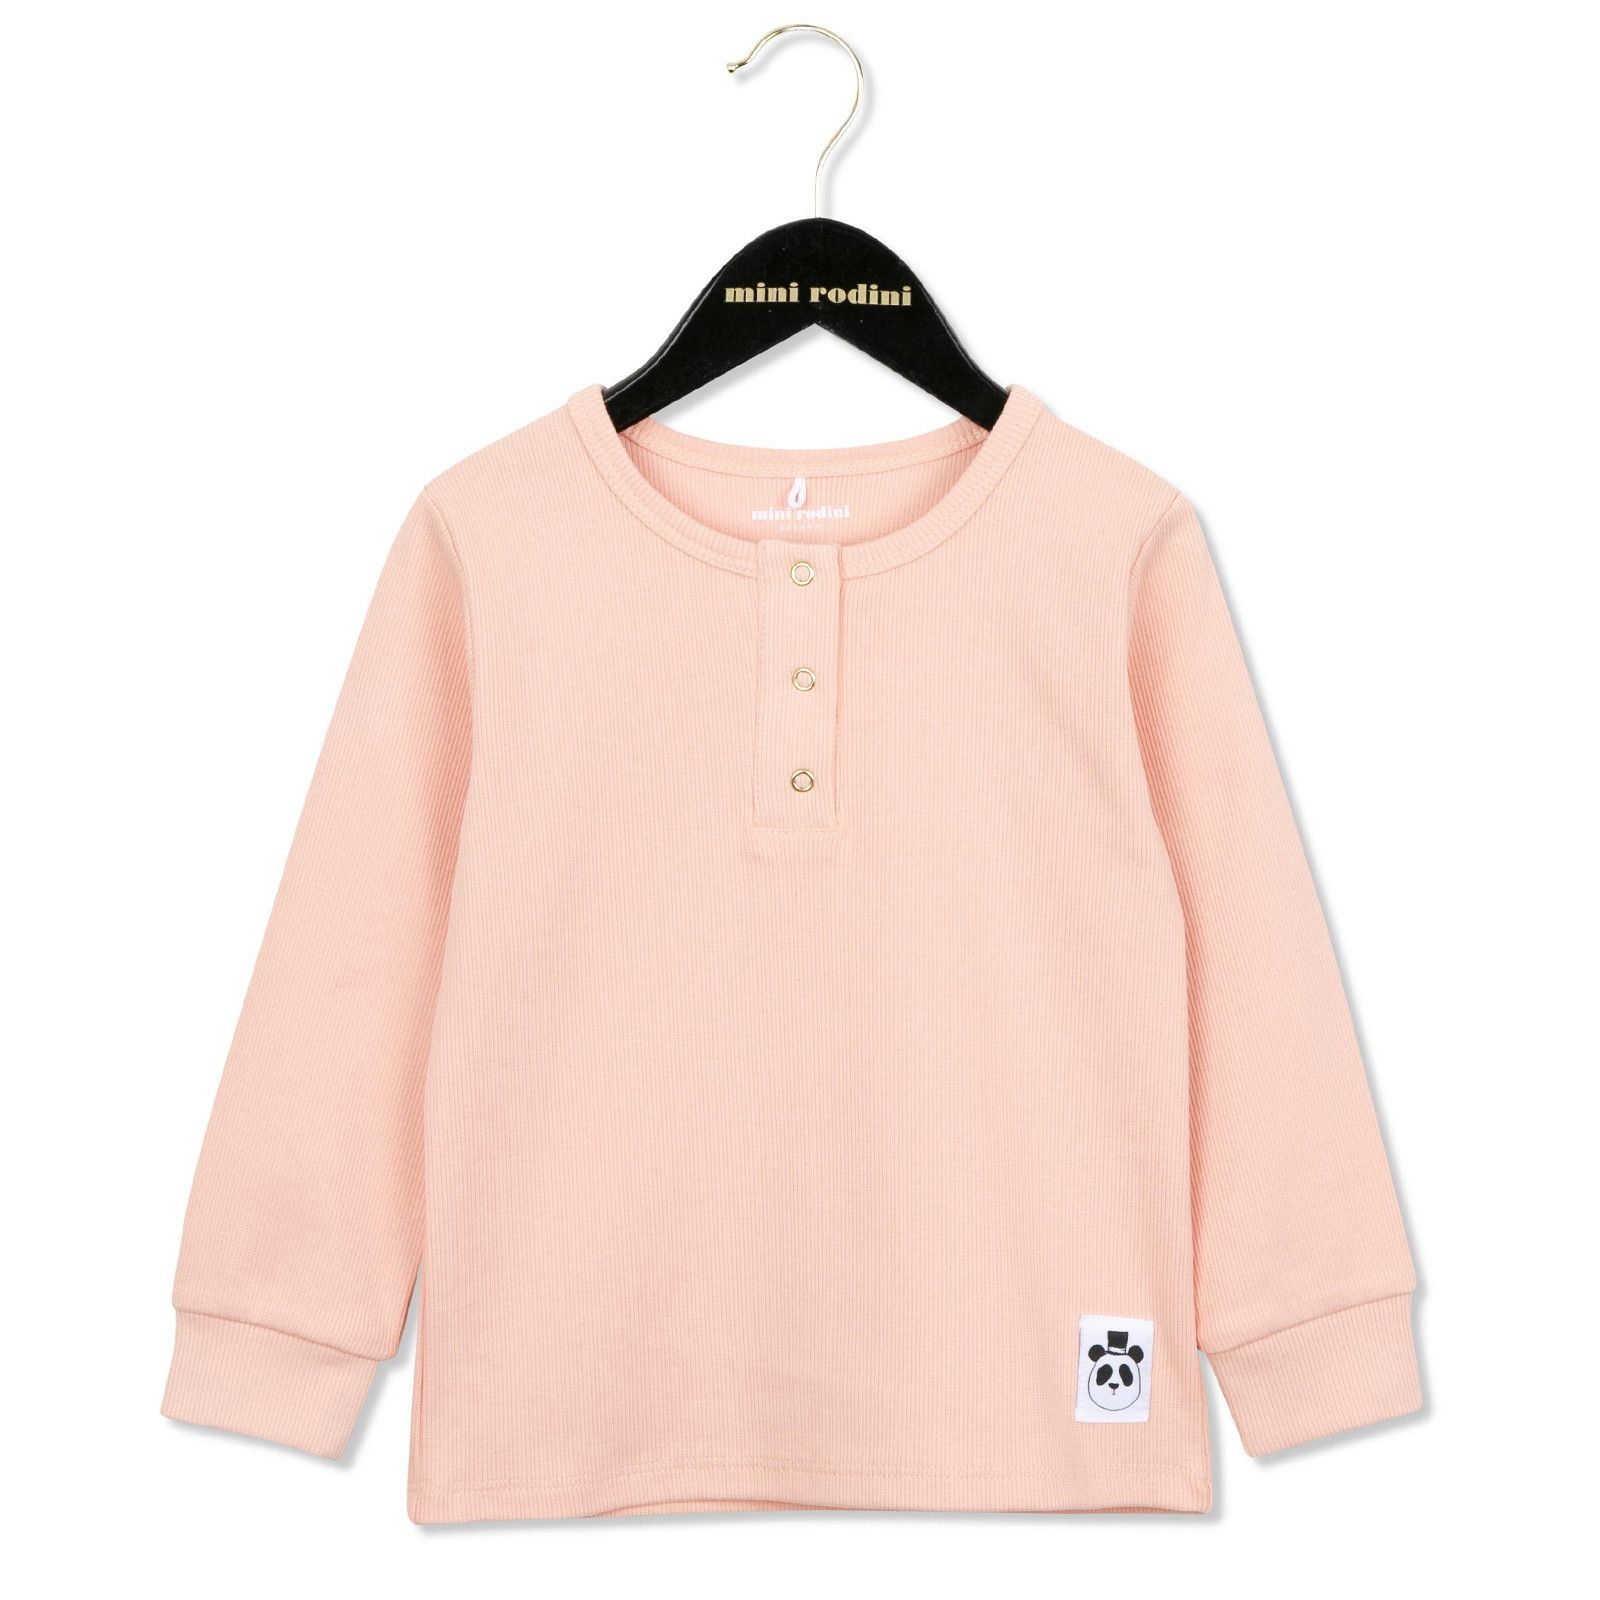 Girls Light Pink Cotton T-Shirt With Panda Label - CÉMAROSE | Children's Fashion Store - 1